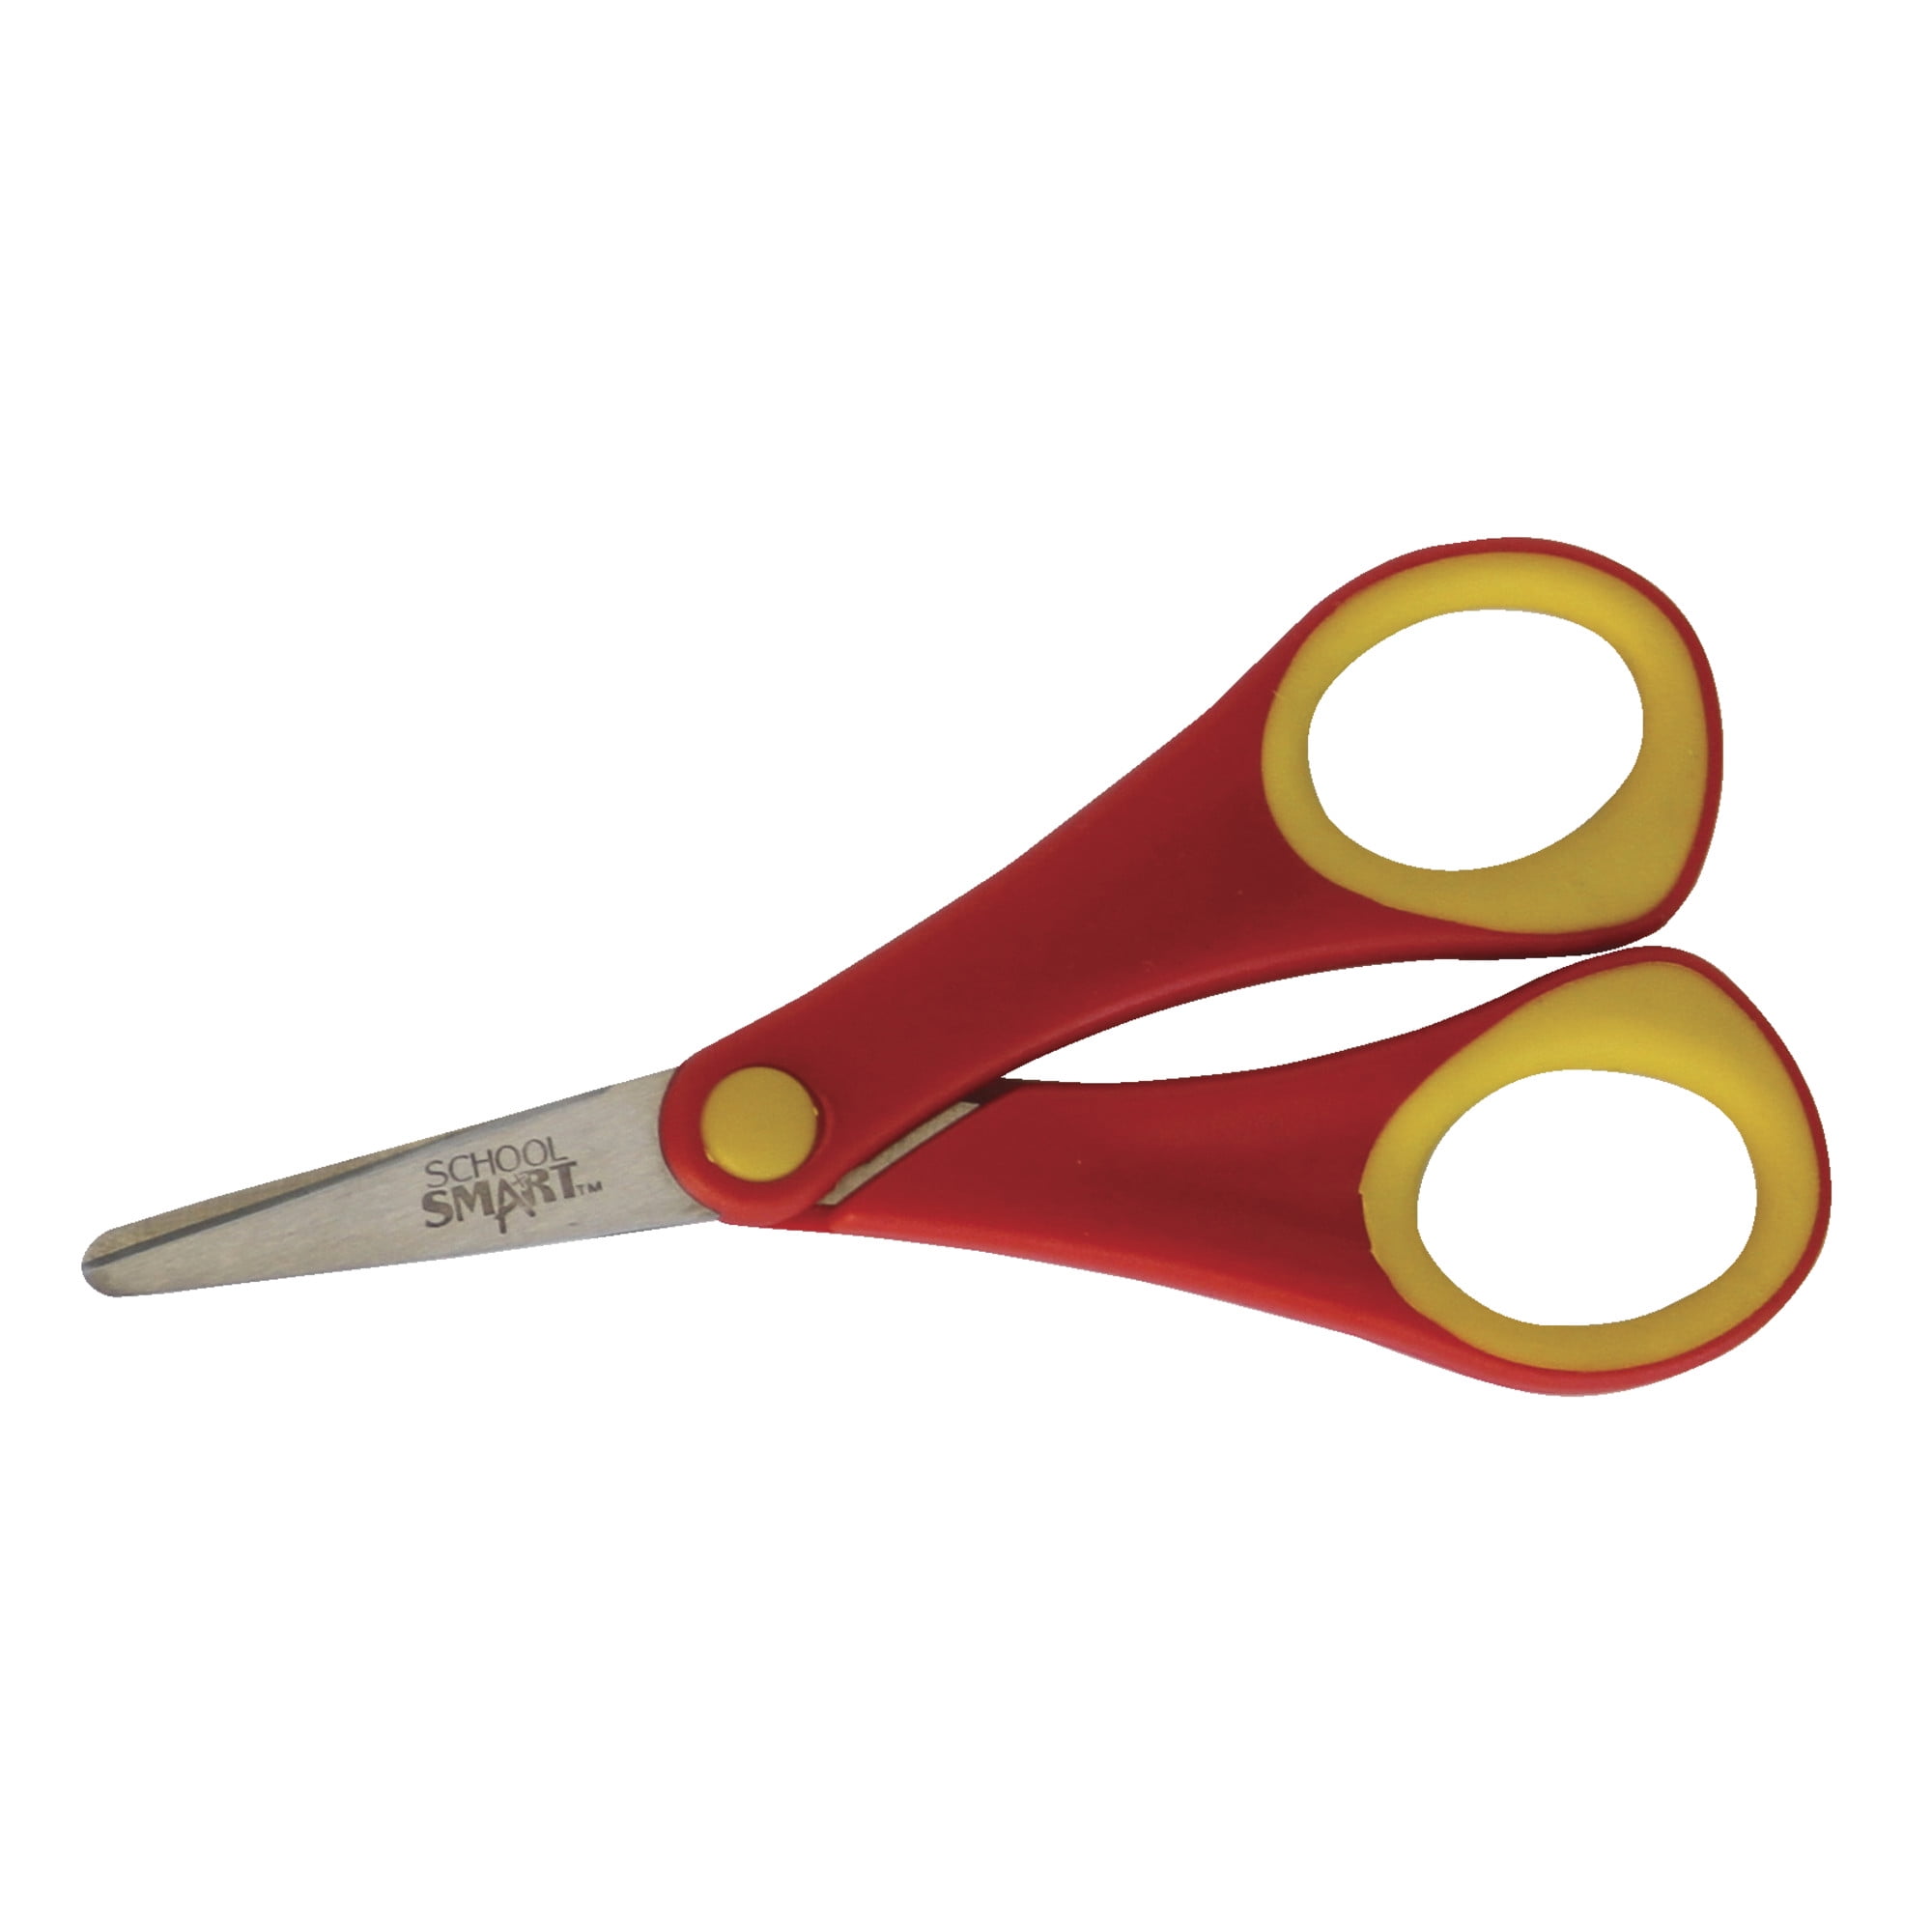 5 Blunt Tip School Scissors (BULK) 1 pack 24 scissors - 224188